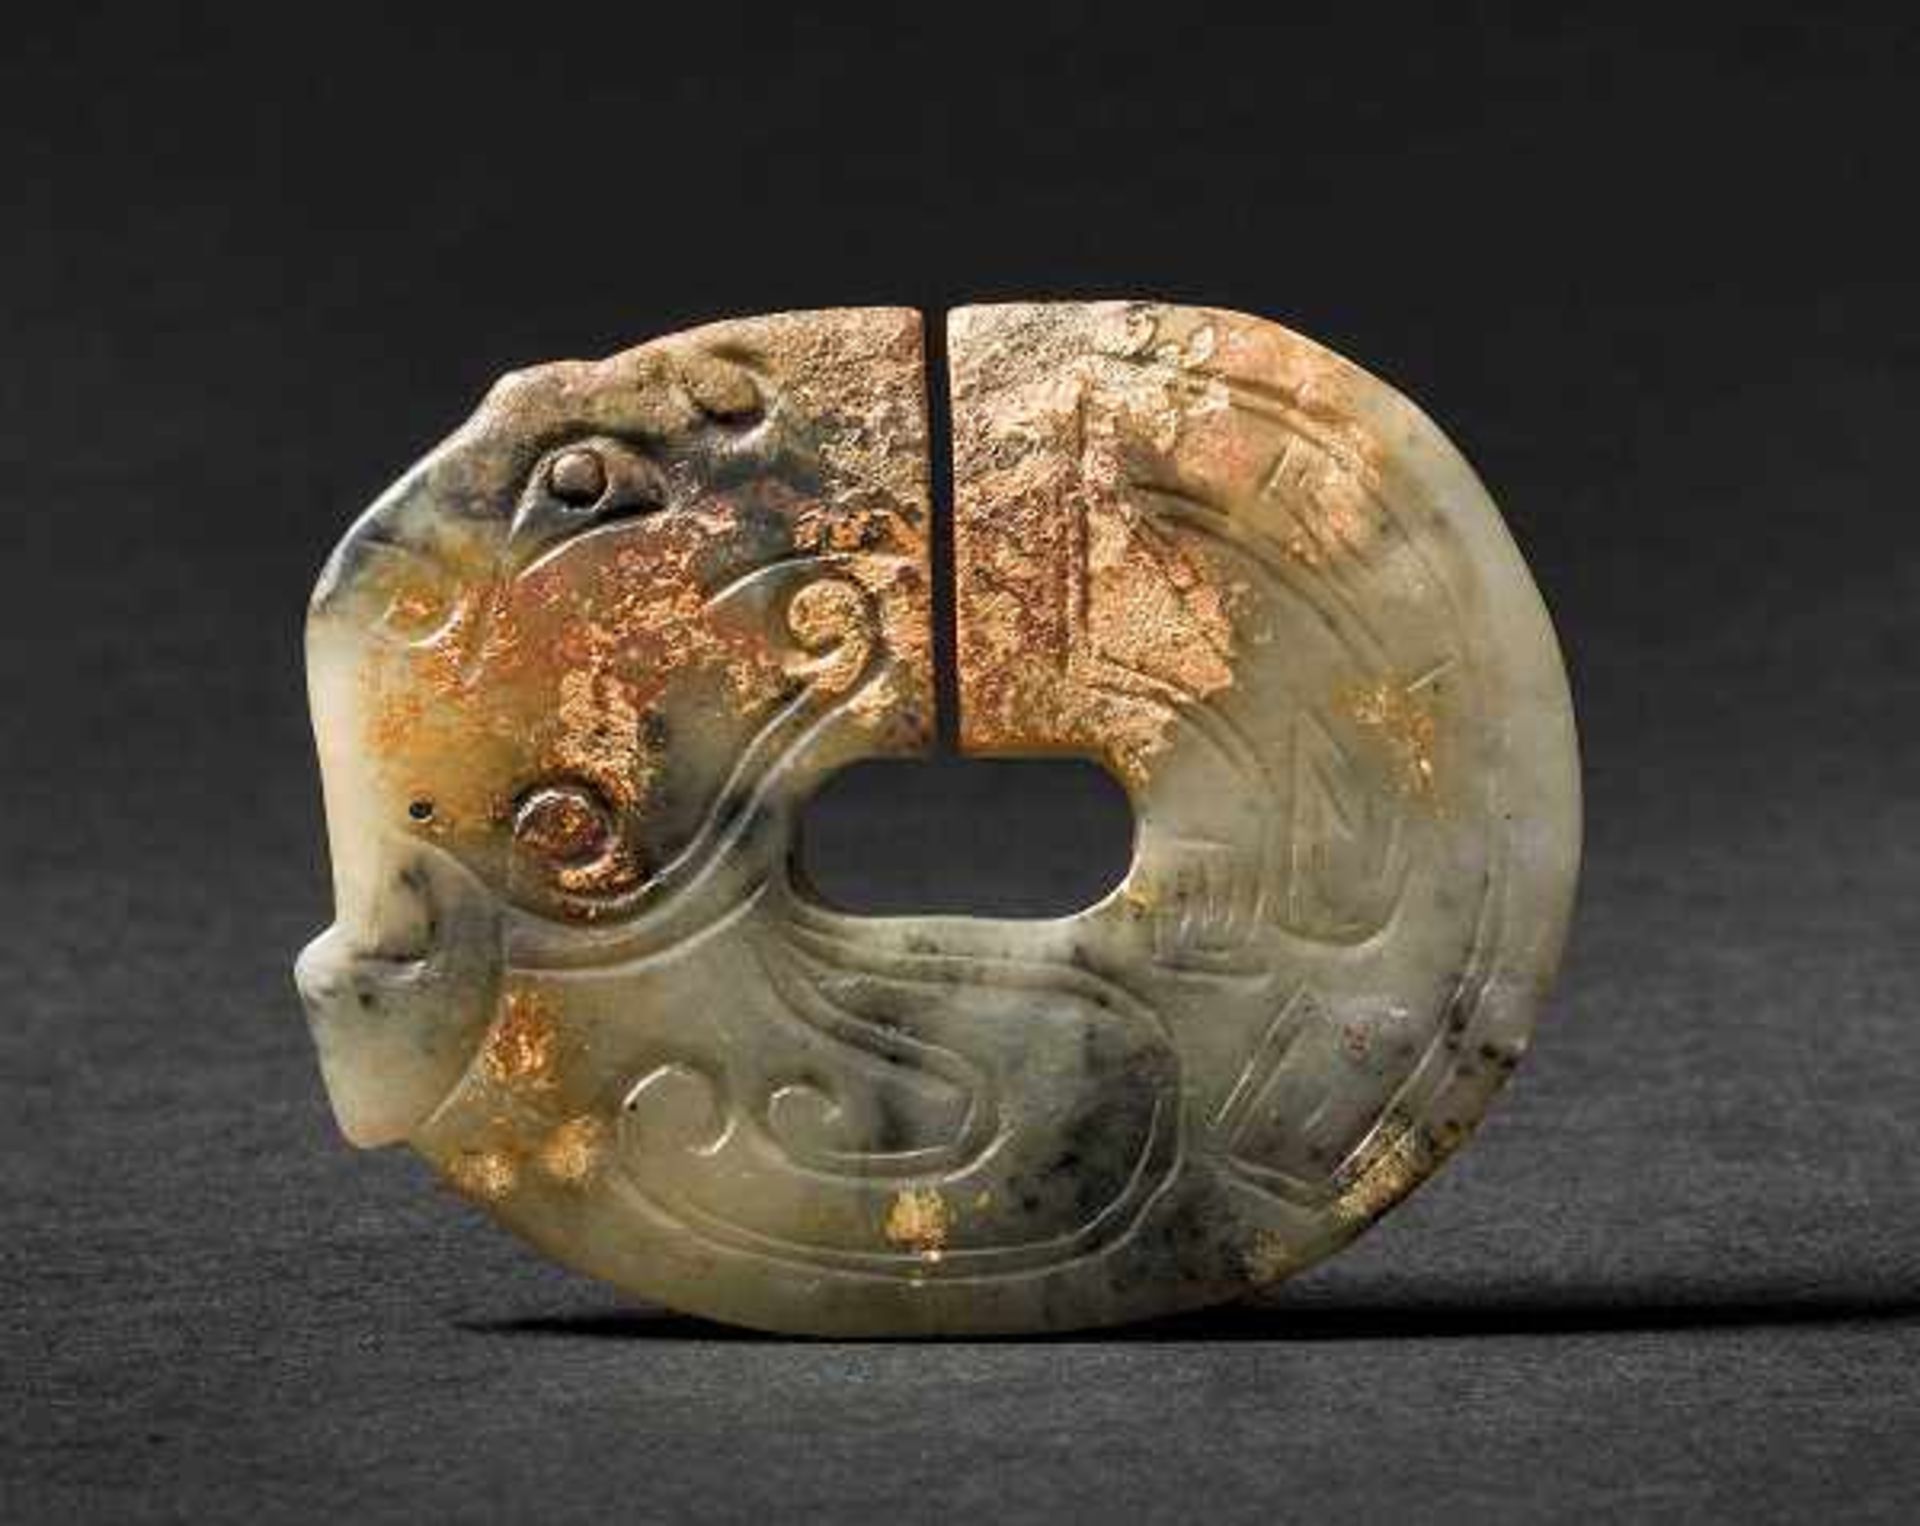 A Jade Jüe with Phoenix Design, Early Zhou Dynasty 西周早期鳳紋玉玦 Width 7.8 cm, height 6.3 cm. 寬 7.8 cm, 高